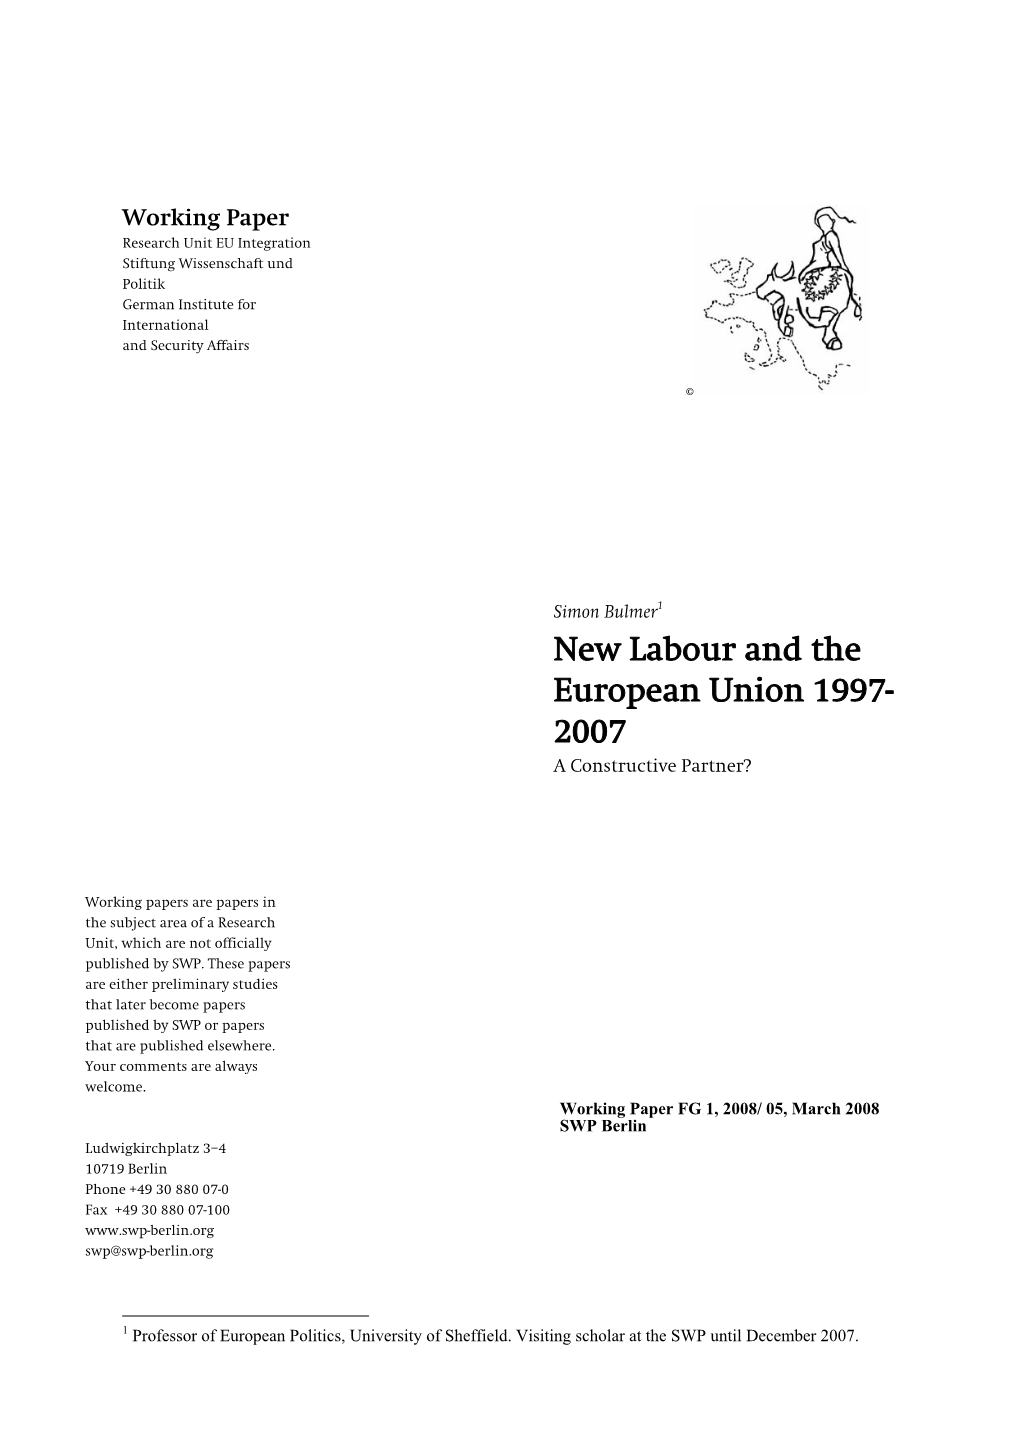 New Labour and the European Union 1997- 2007 a Constructive Partner?